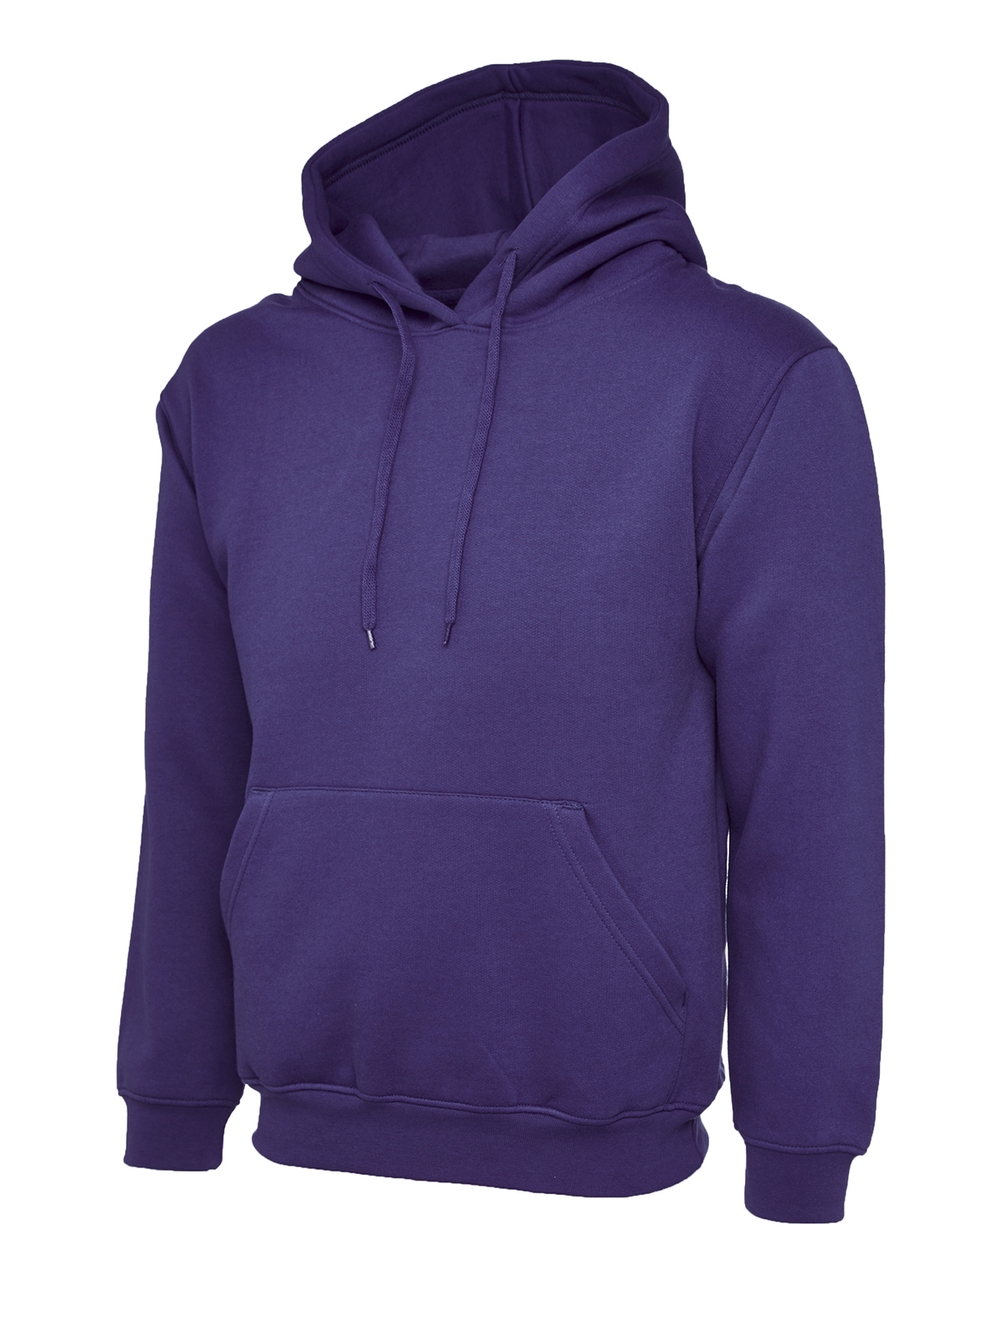 Purplehoodedsweatshirt